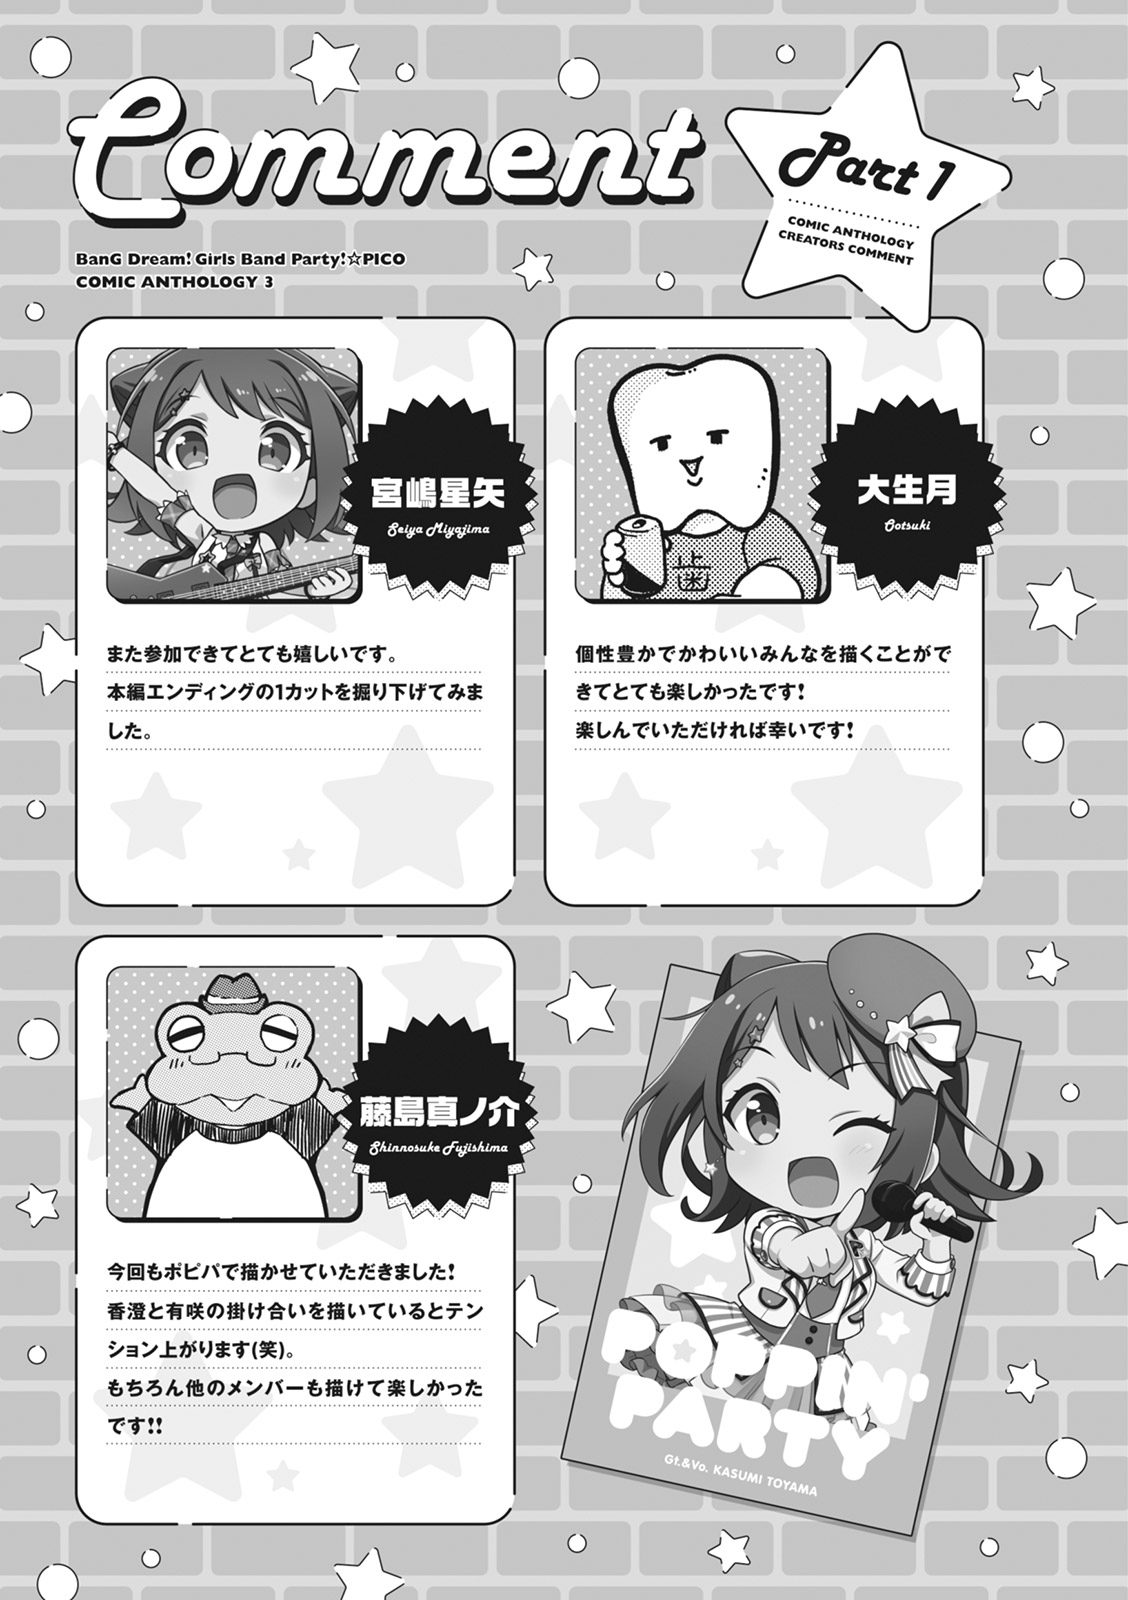 BanG Dream! GirBa Pico Comic Anthology 3 24